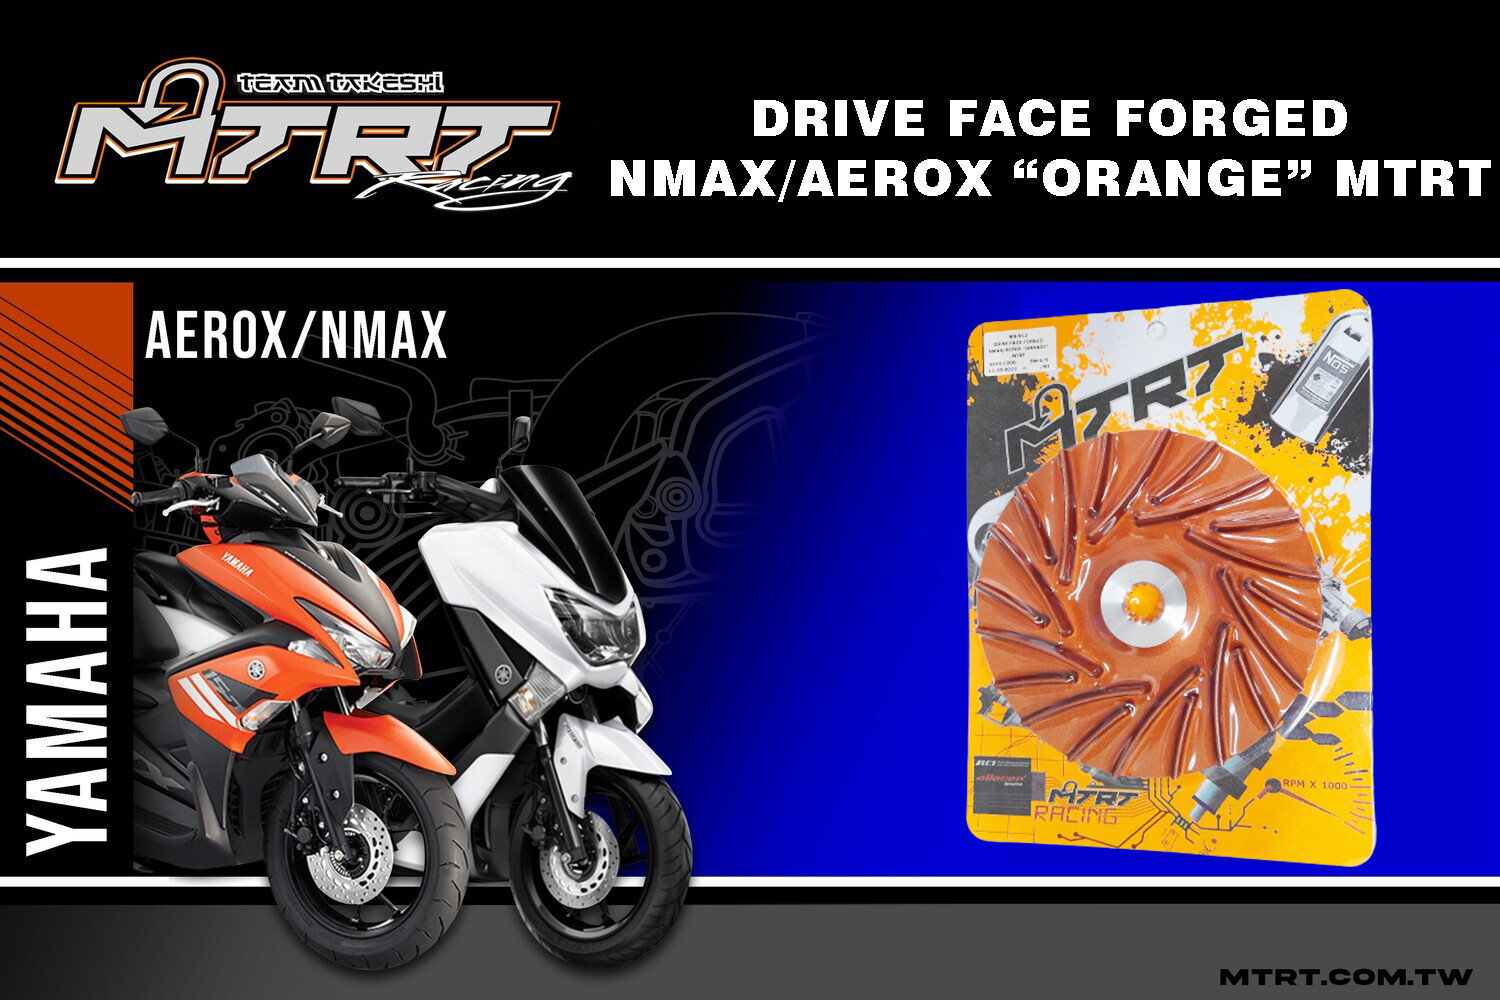 DRIVE FACE FORGED NMAX/AEROX “ORANGE” MTRT